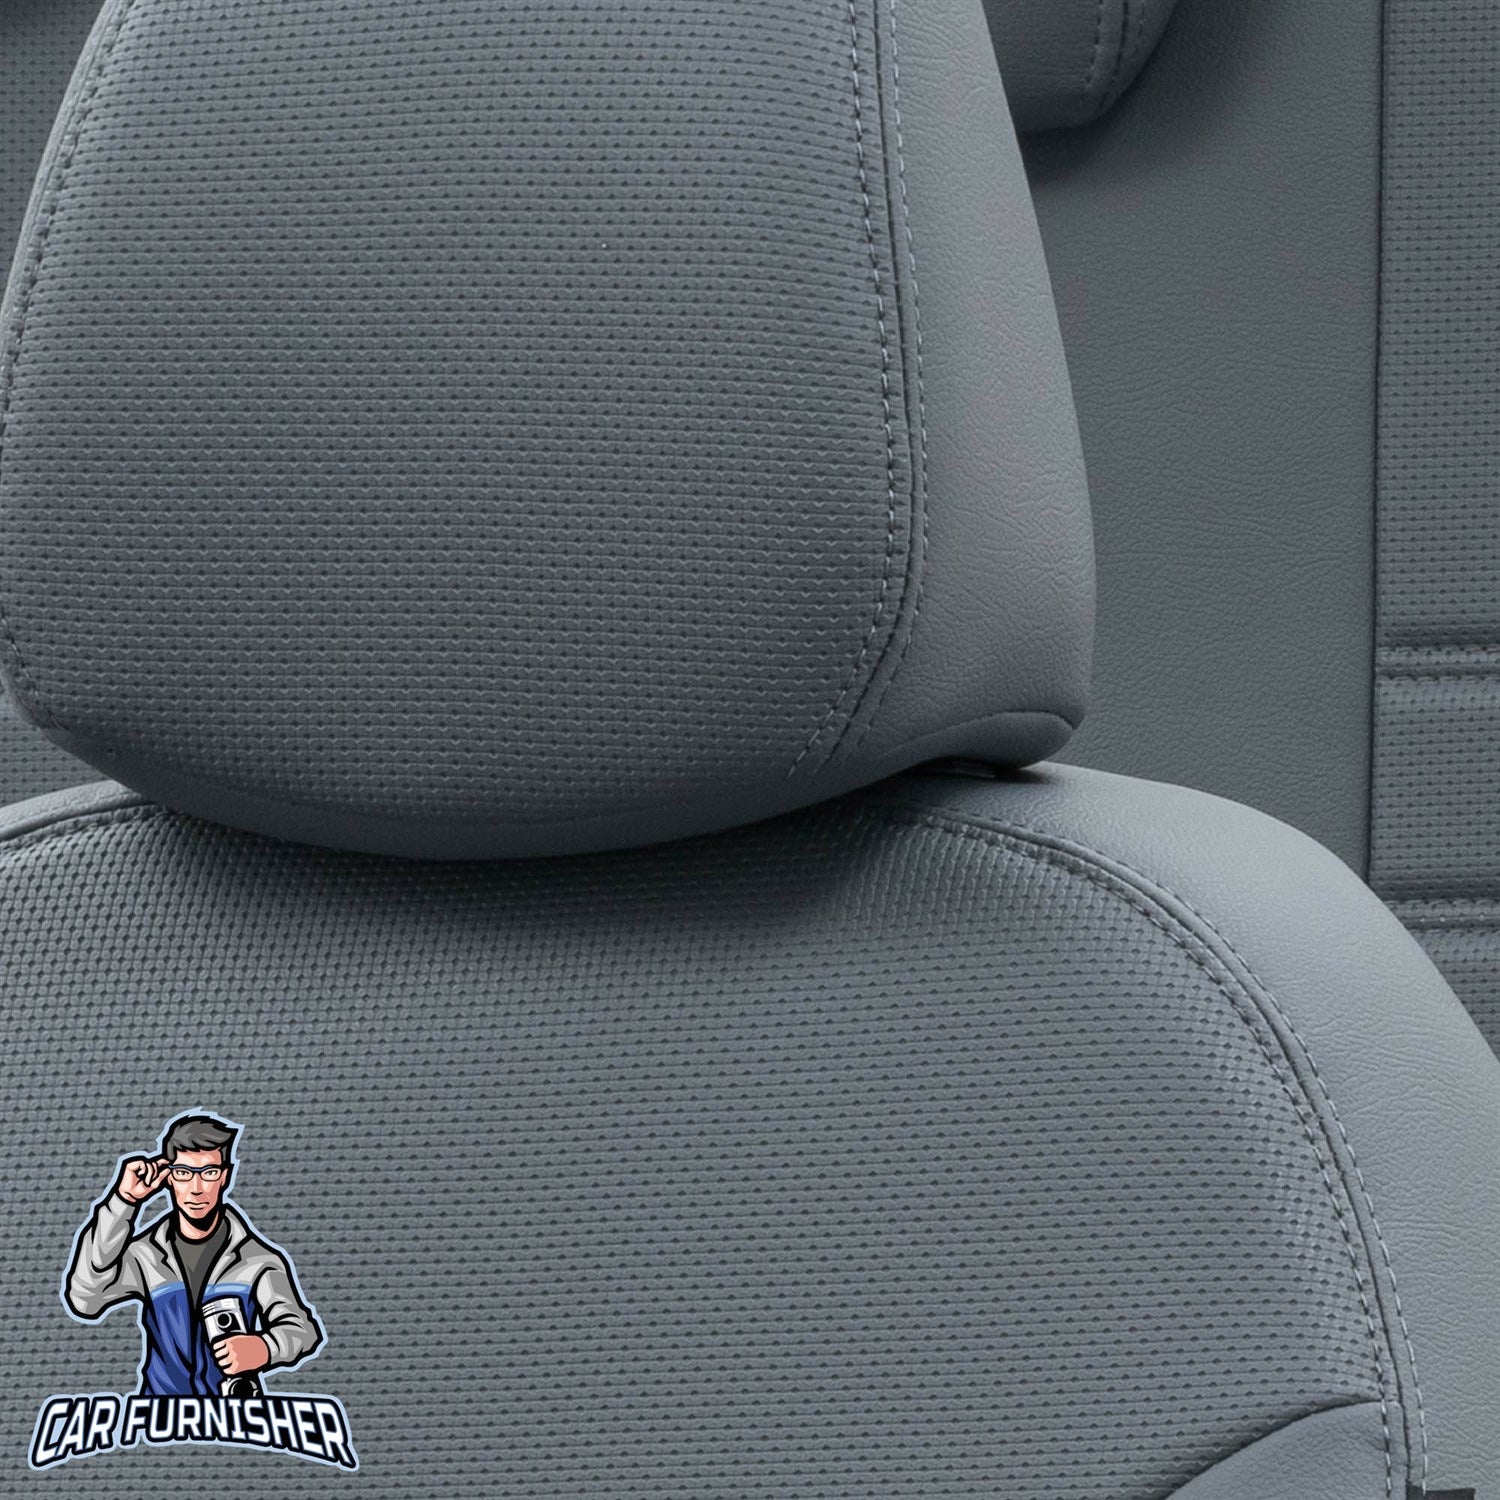 Fiat Bravo Car Seat Covers 2007-2013 New York Design Smoked Full Set (5 Seats + Handrest) Leather & Fabric